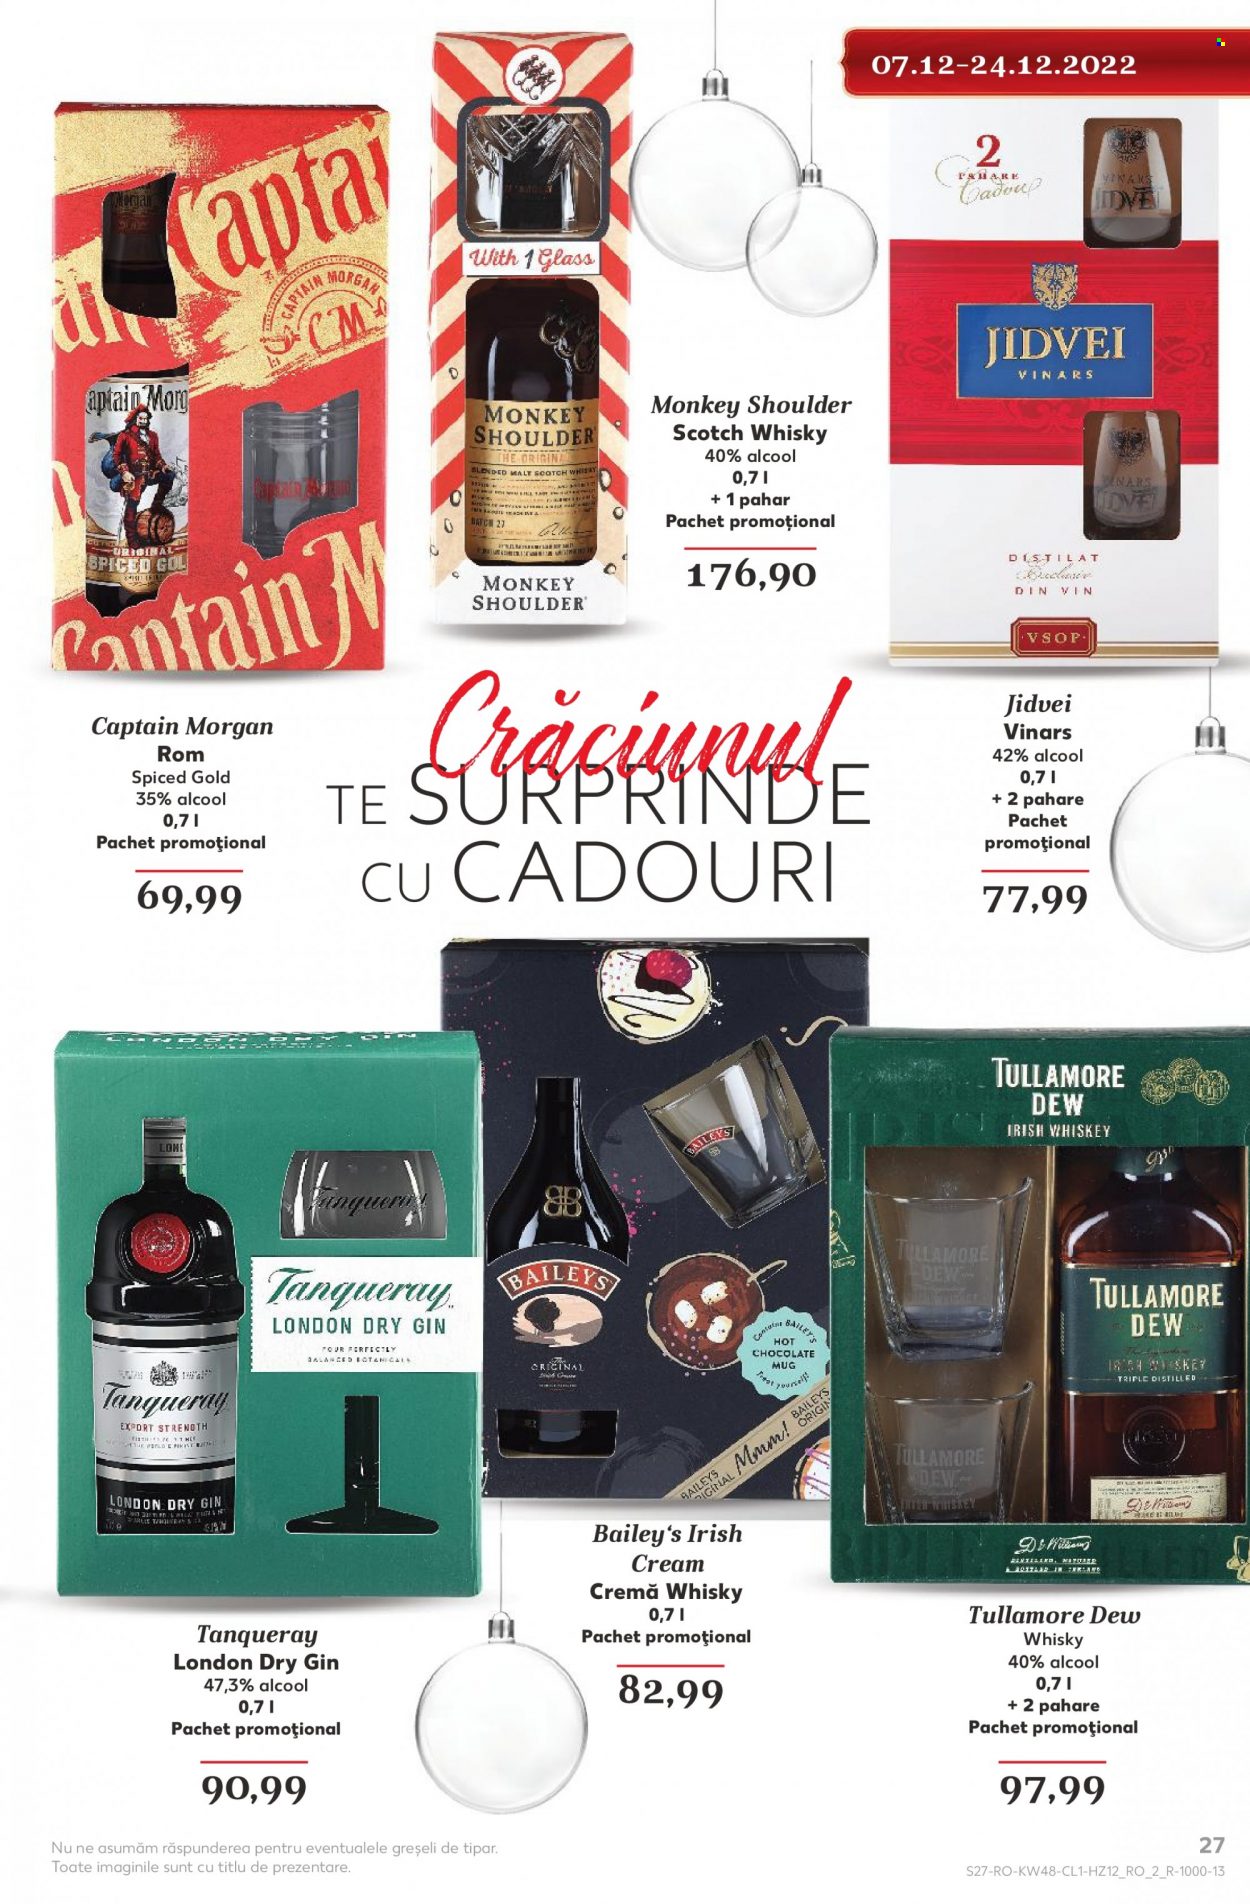 thumbnail - Cataloage Kaufland - 30.11.2022 - 31.12.2022 - Produse în vânzare - Captain Morgan, Baileys, brandy, gin, rom, Scotch Whisky, whisky, Jidvei, cremă. Pagina 27.